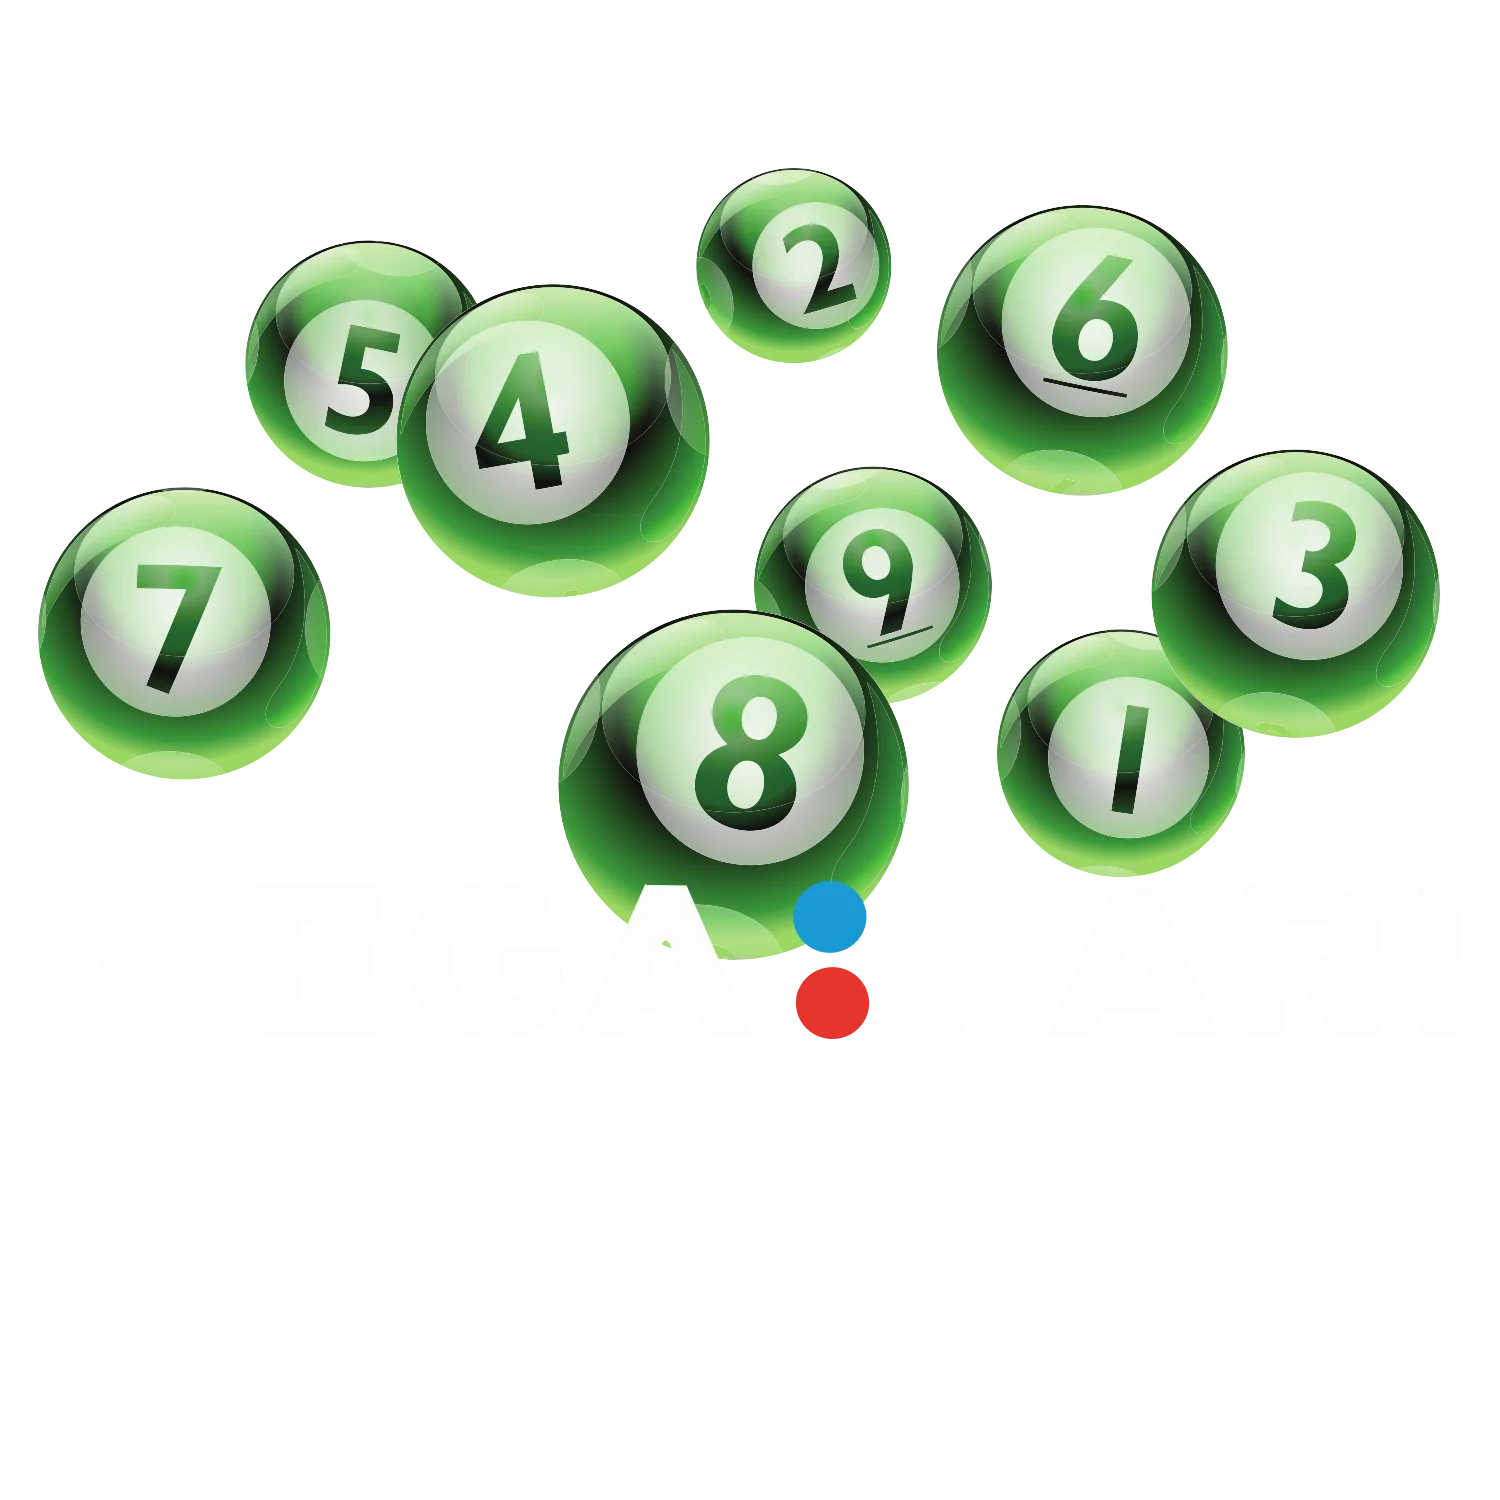 For games on Megapari, choose bingo.